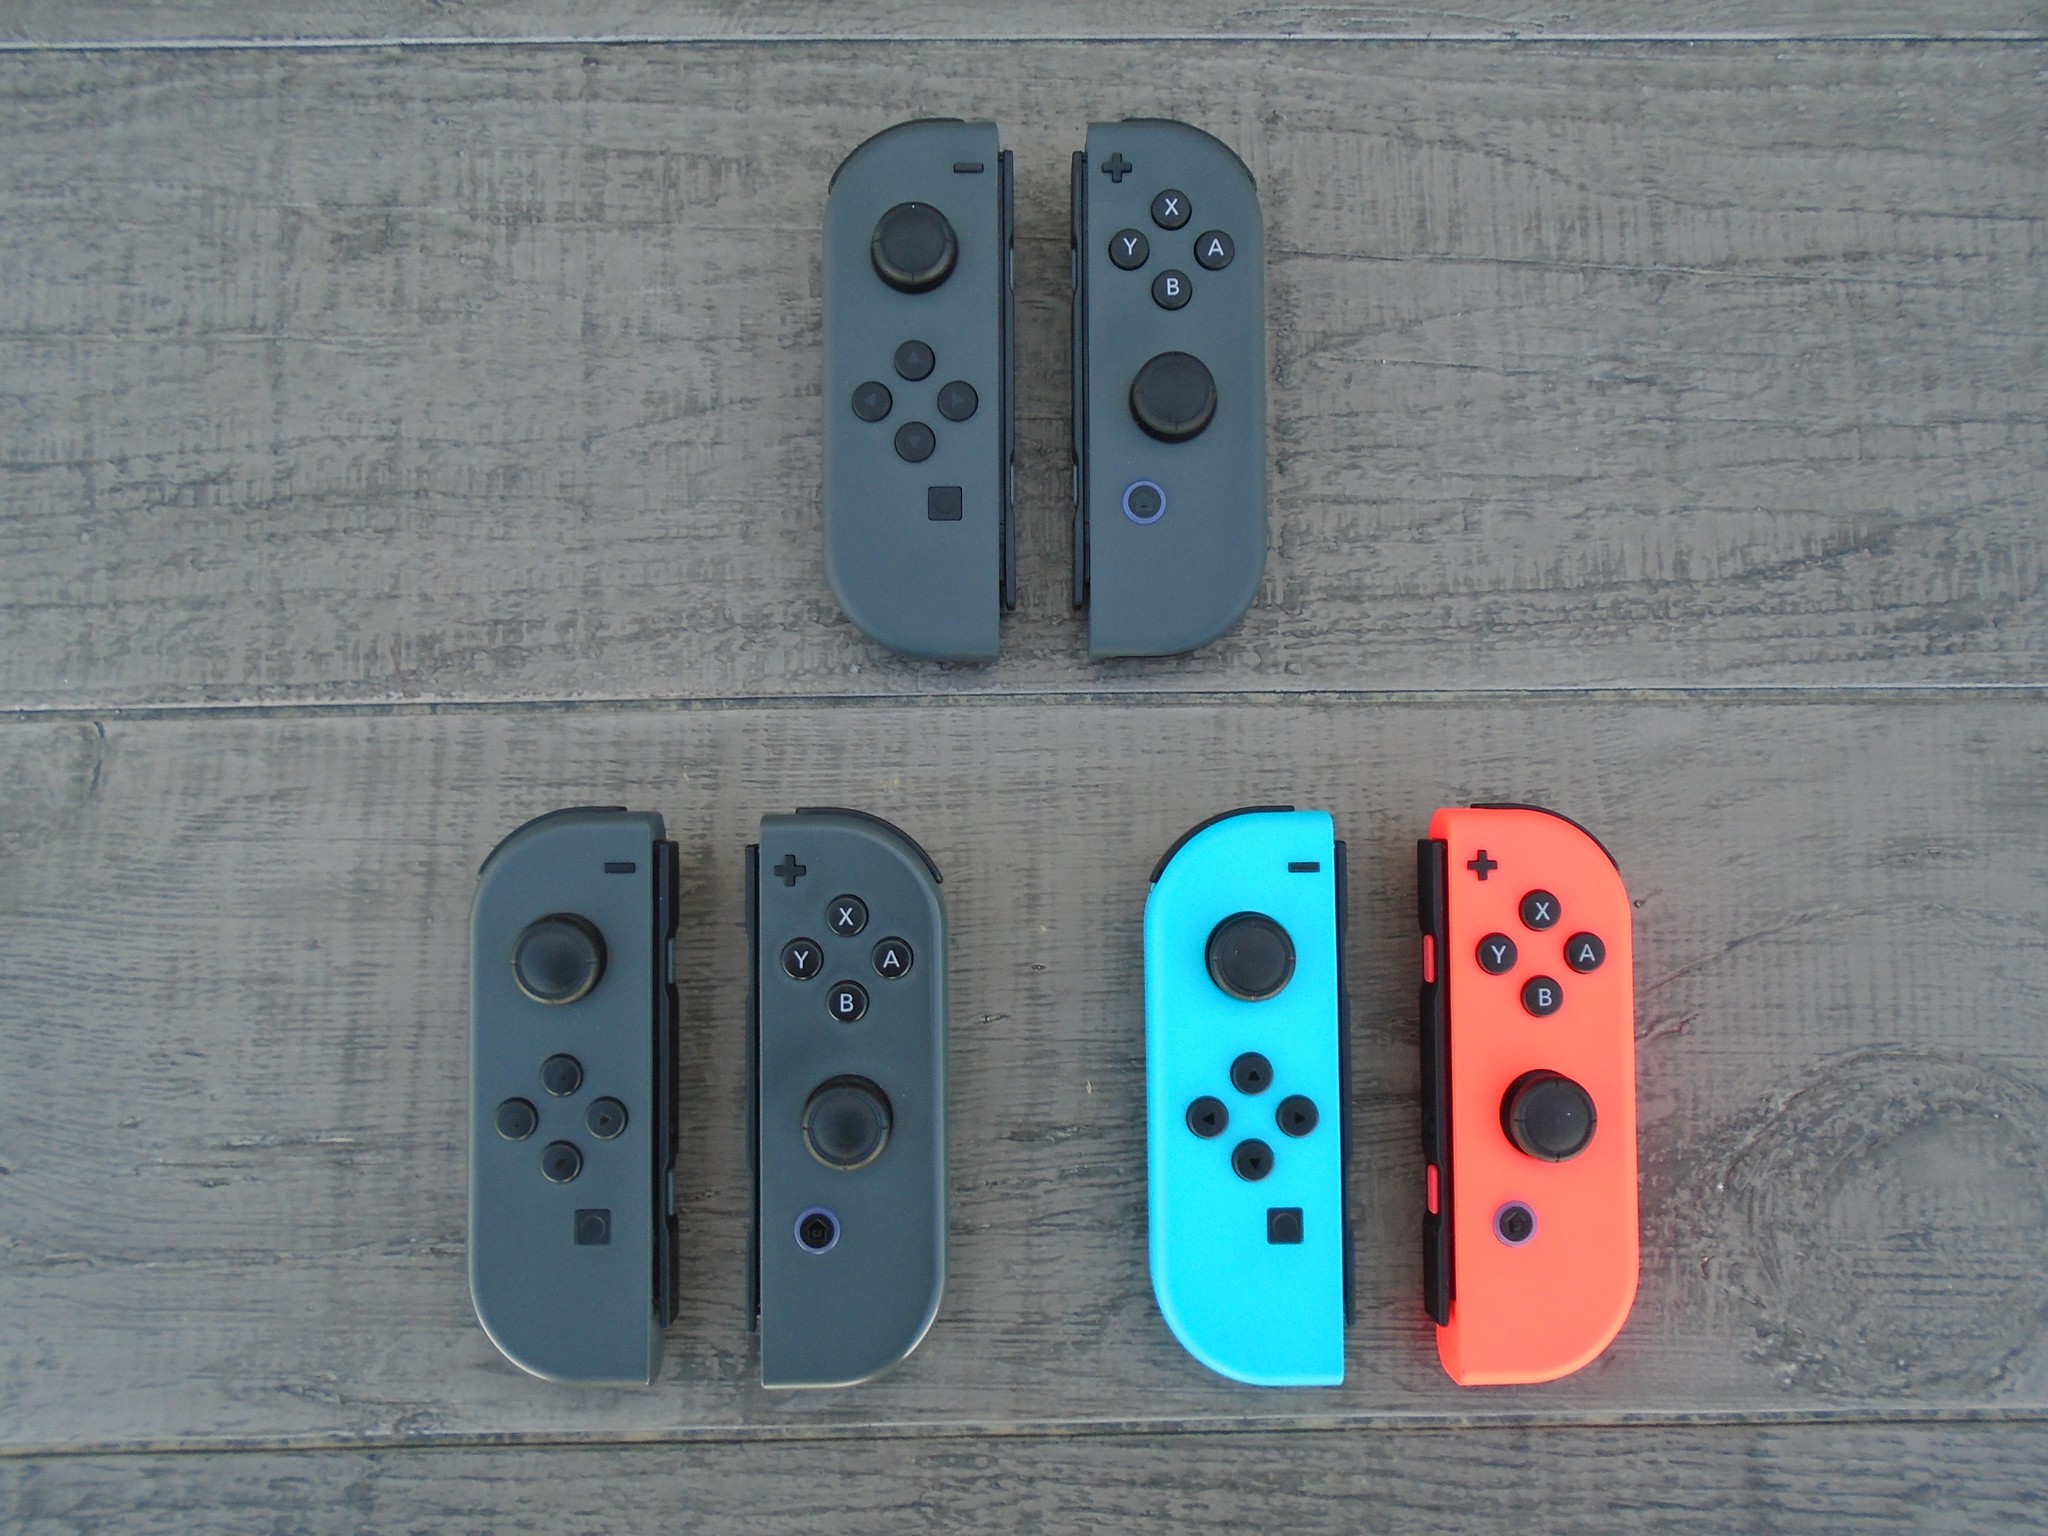 Nintendo Switch Joy-Cons